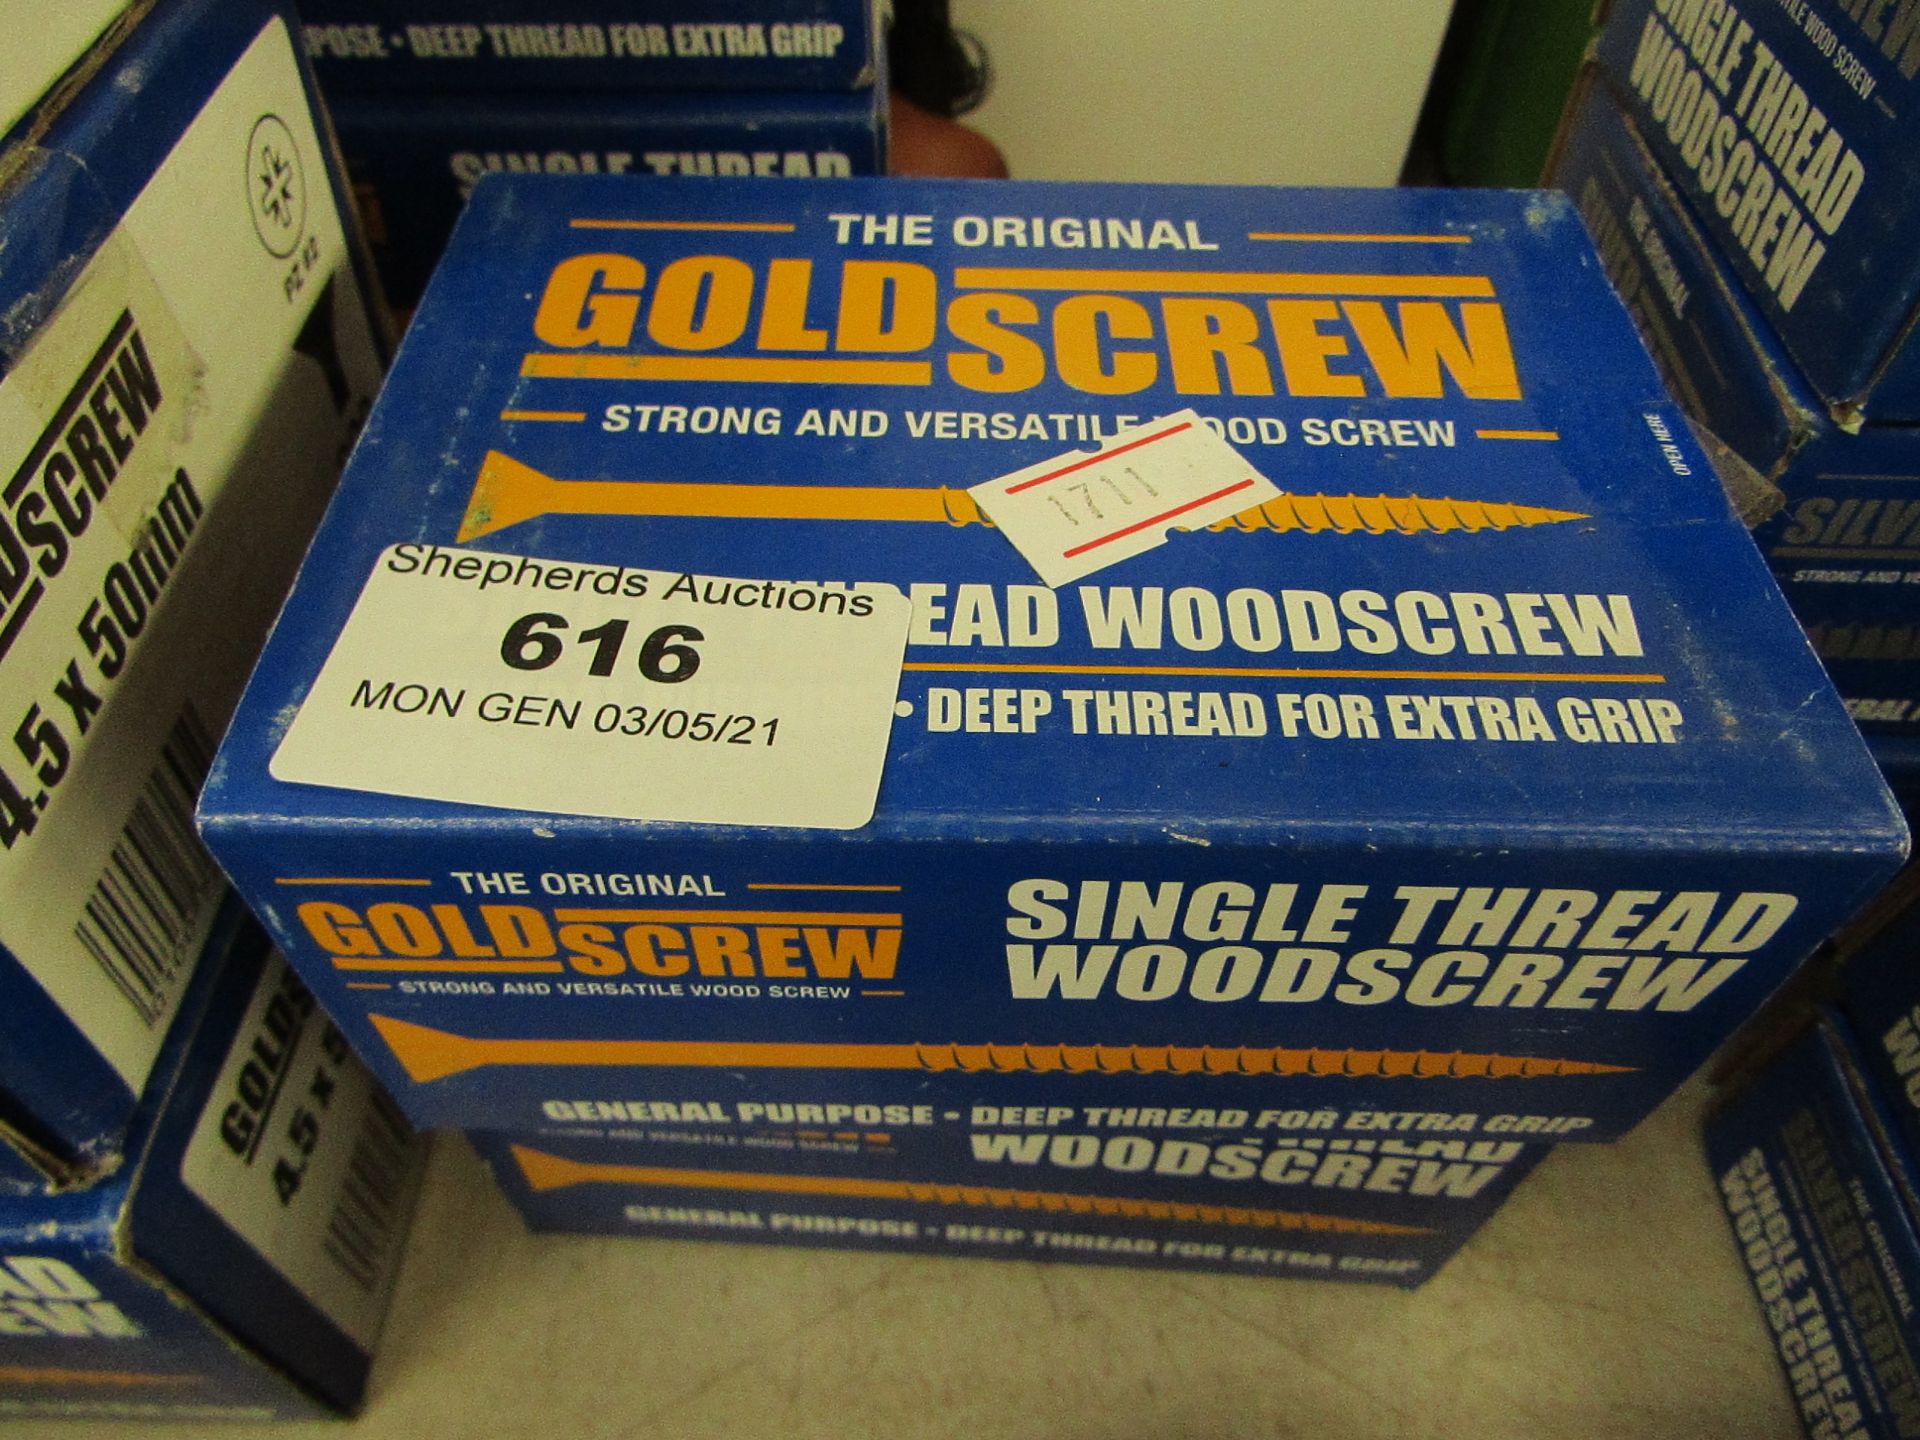 2x The Original Gold Screw - Single Thread Woodscrew 5.0 x 30mm (200 Per Box) - Unused & Boxed.